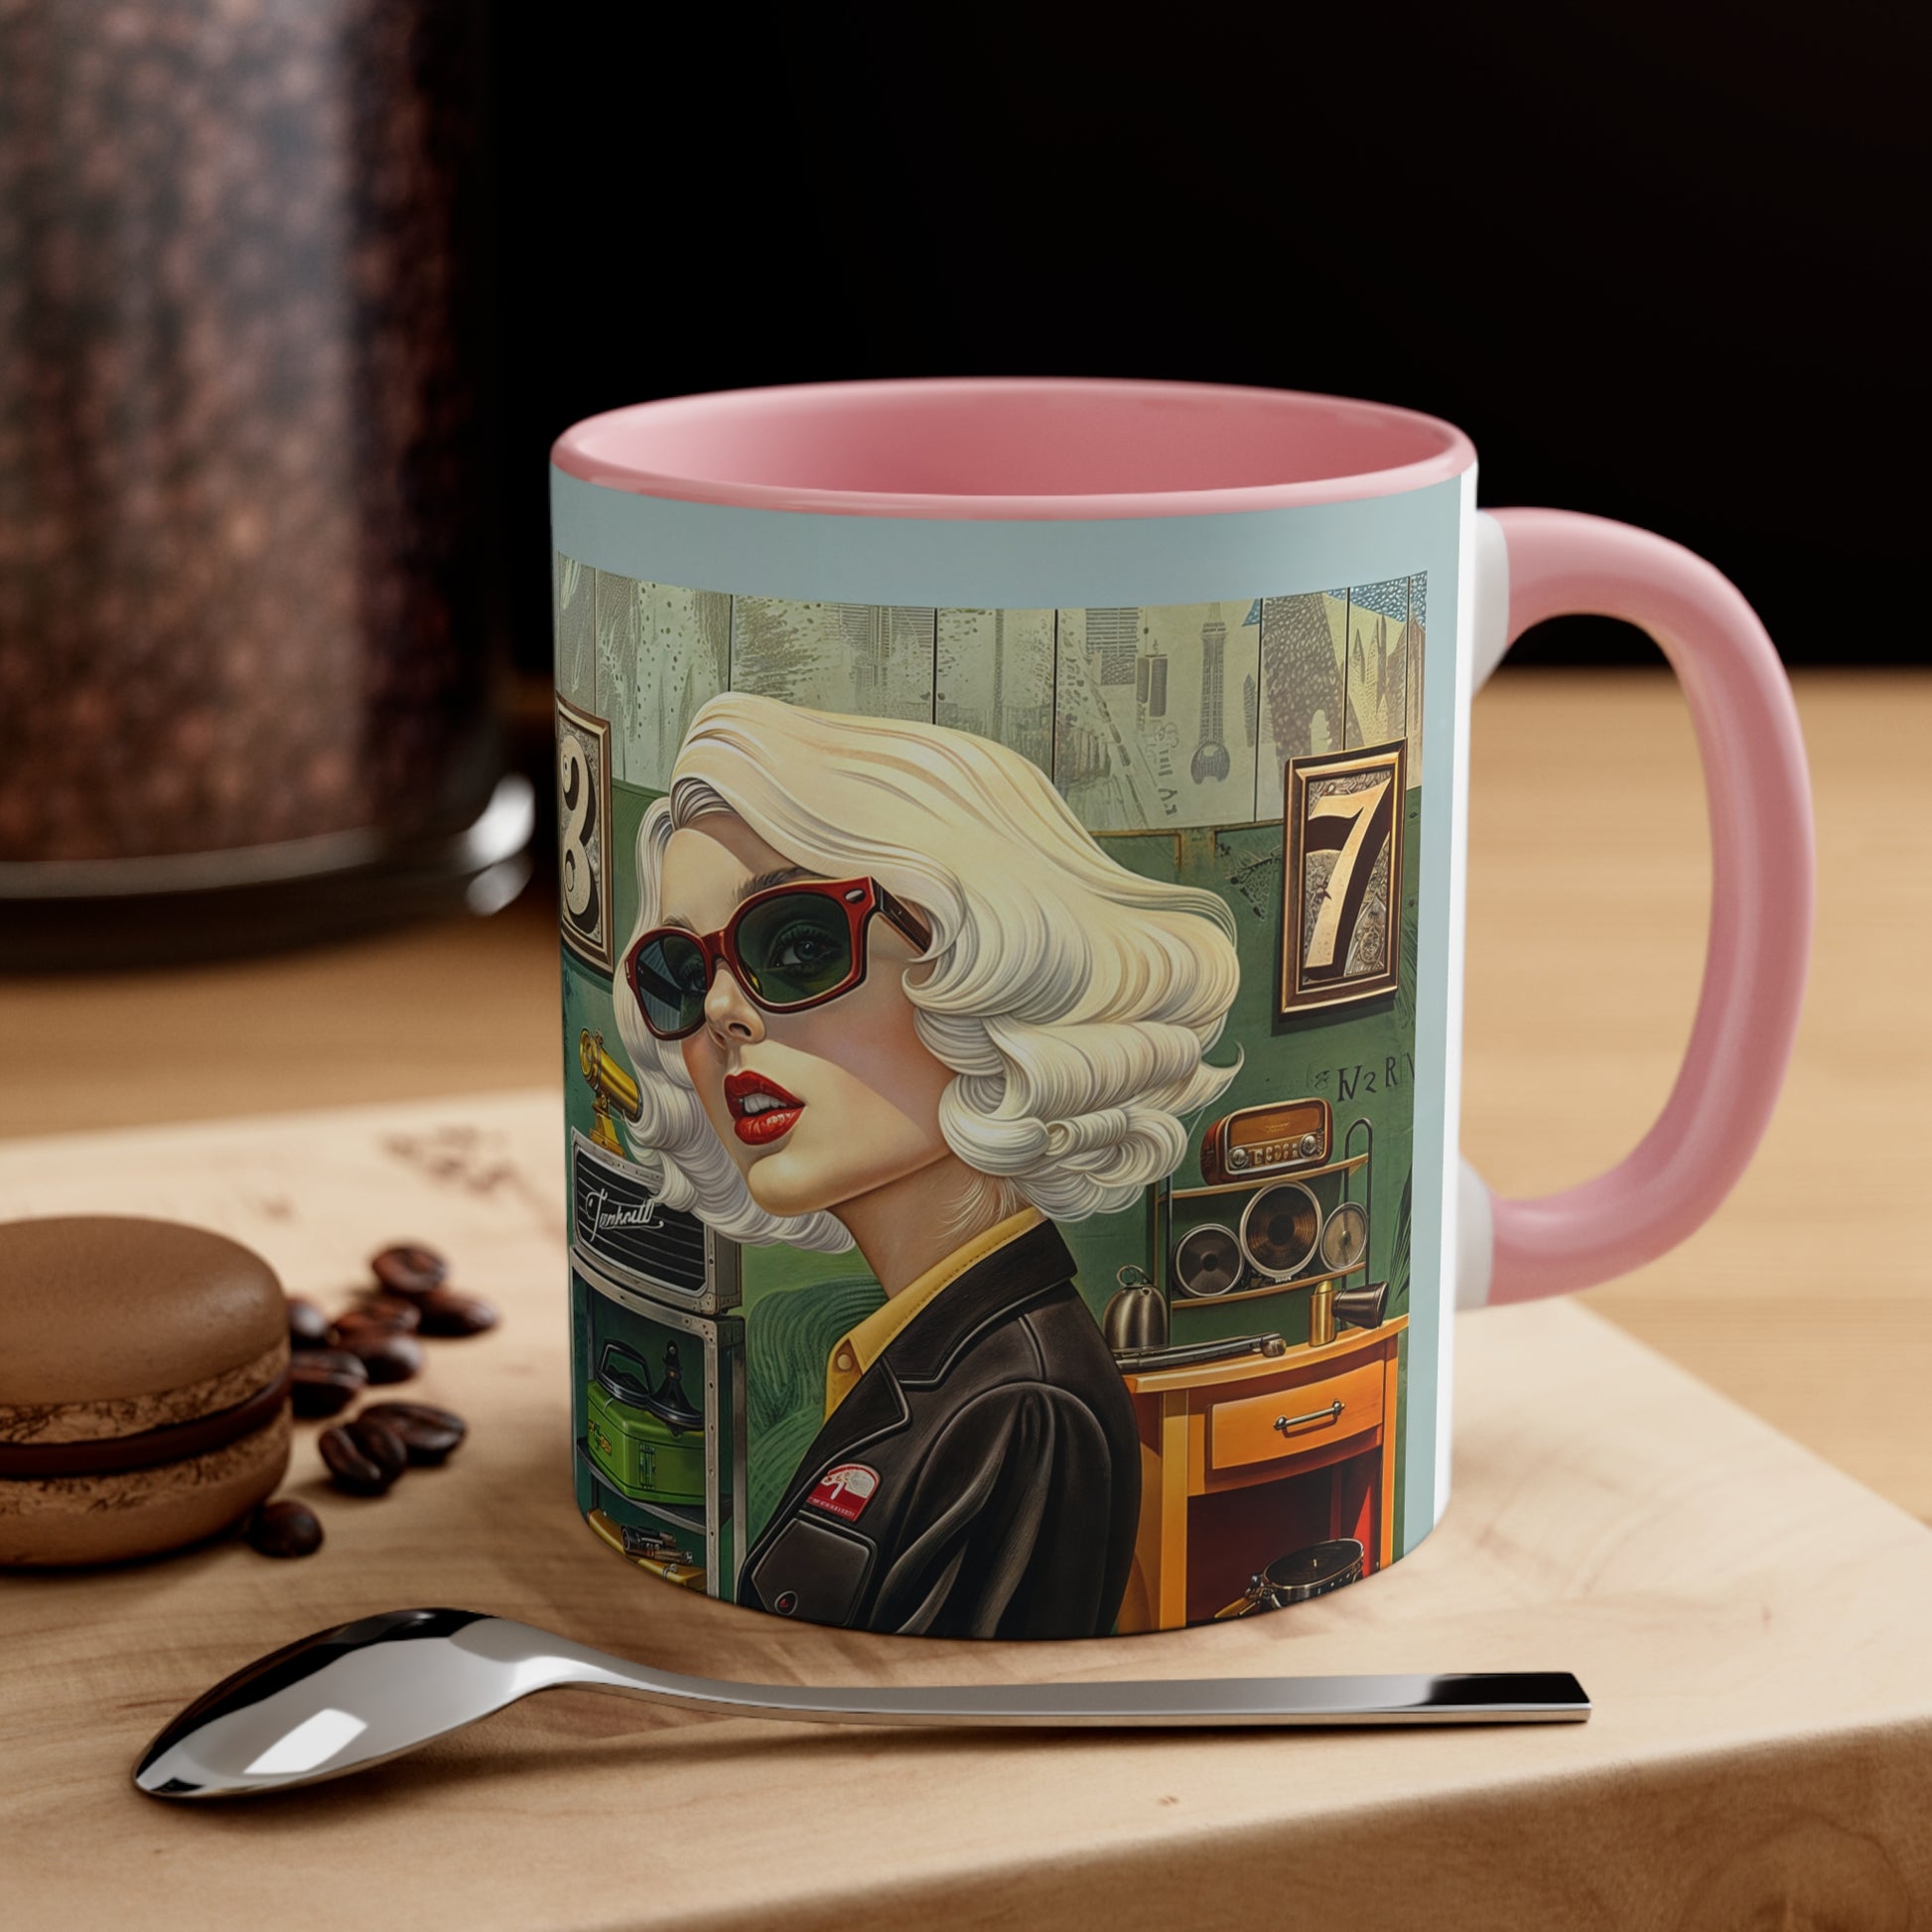 Accent Coffee Mug, 11oz - Tool Time Blonde-pink in situ